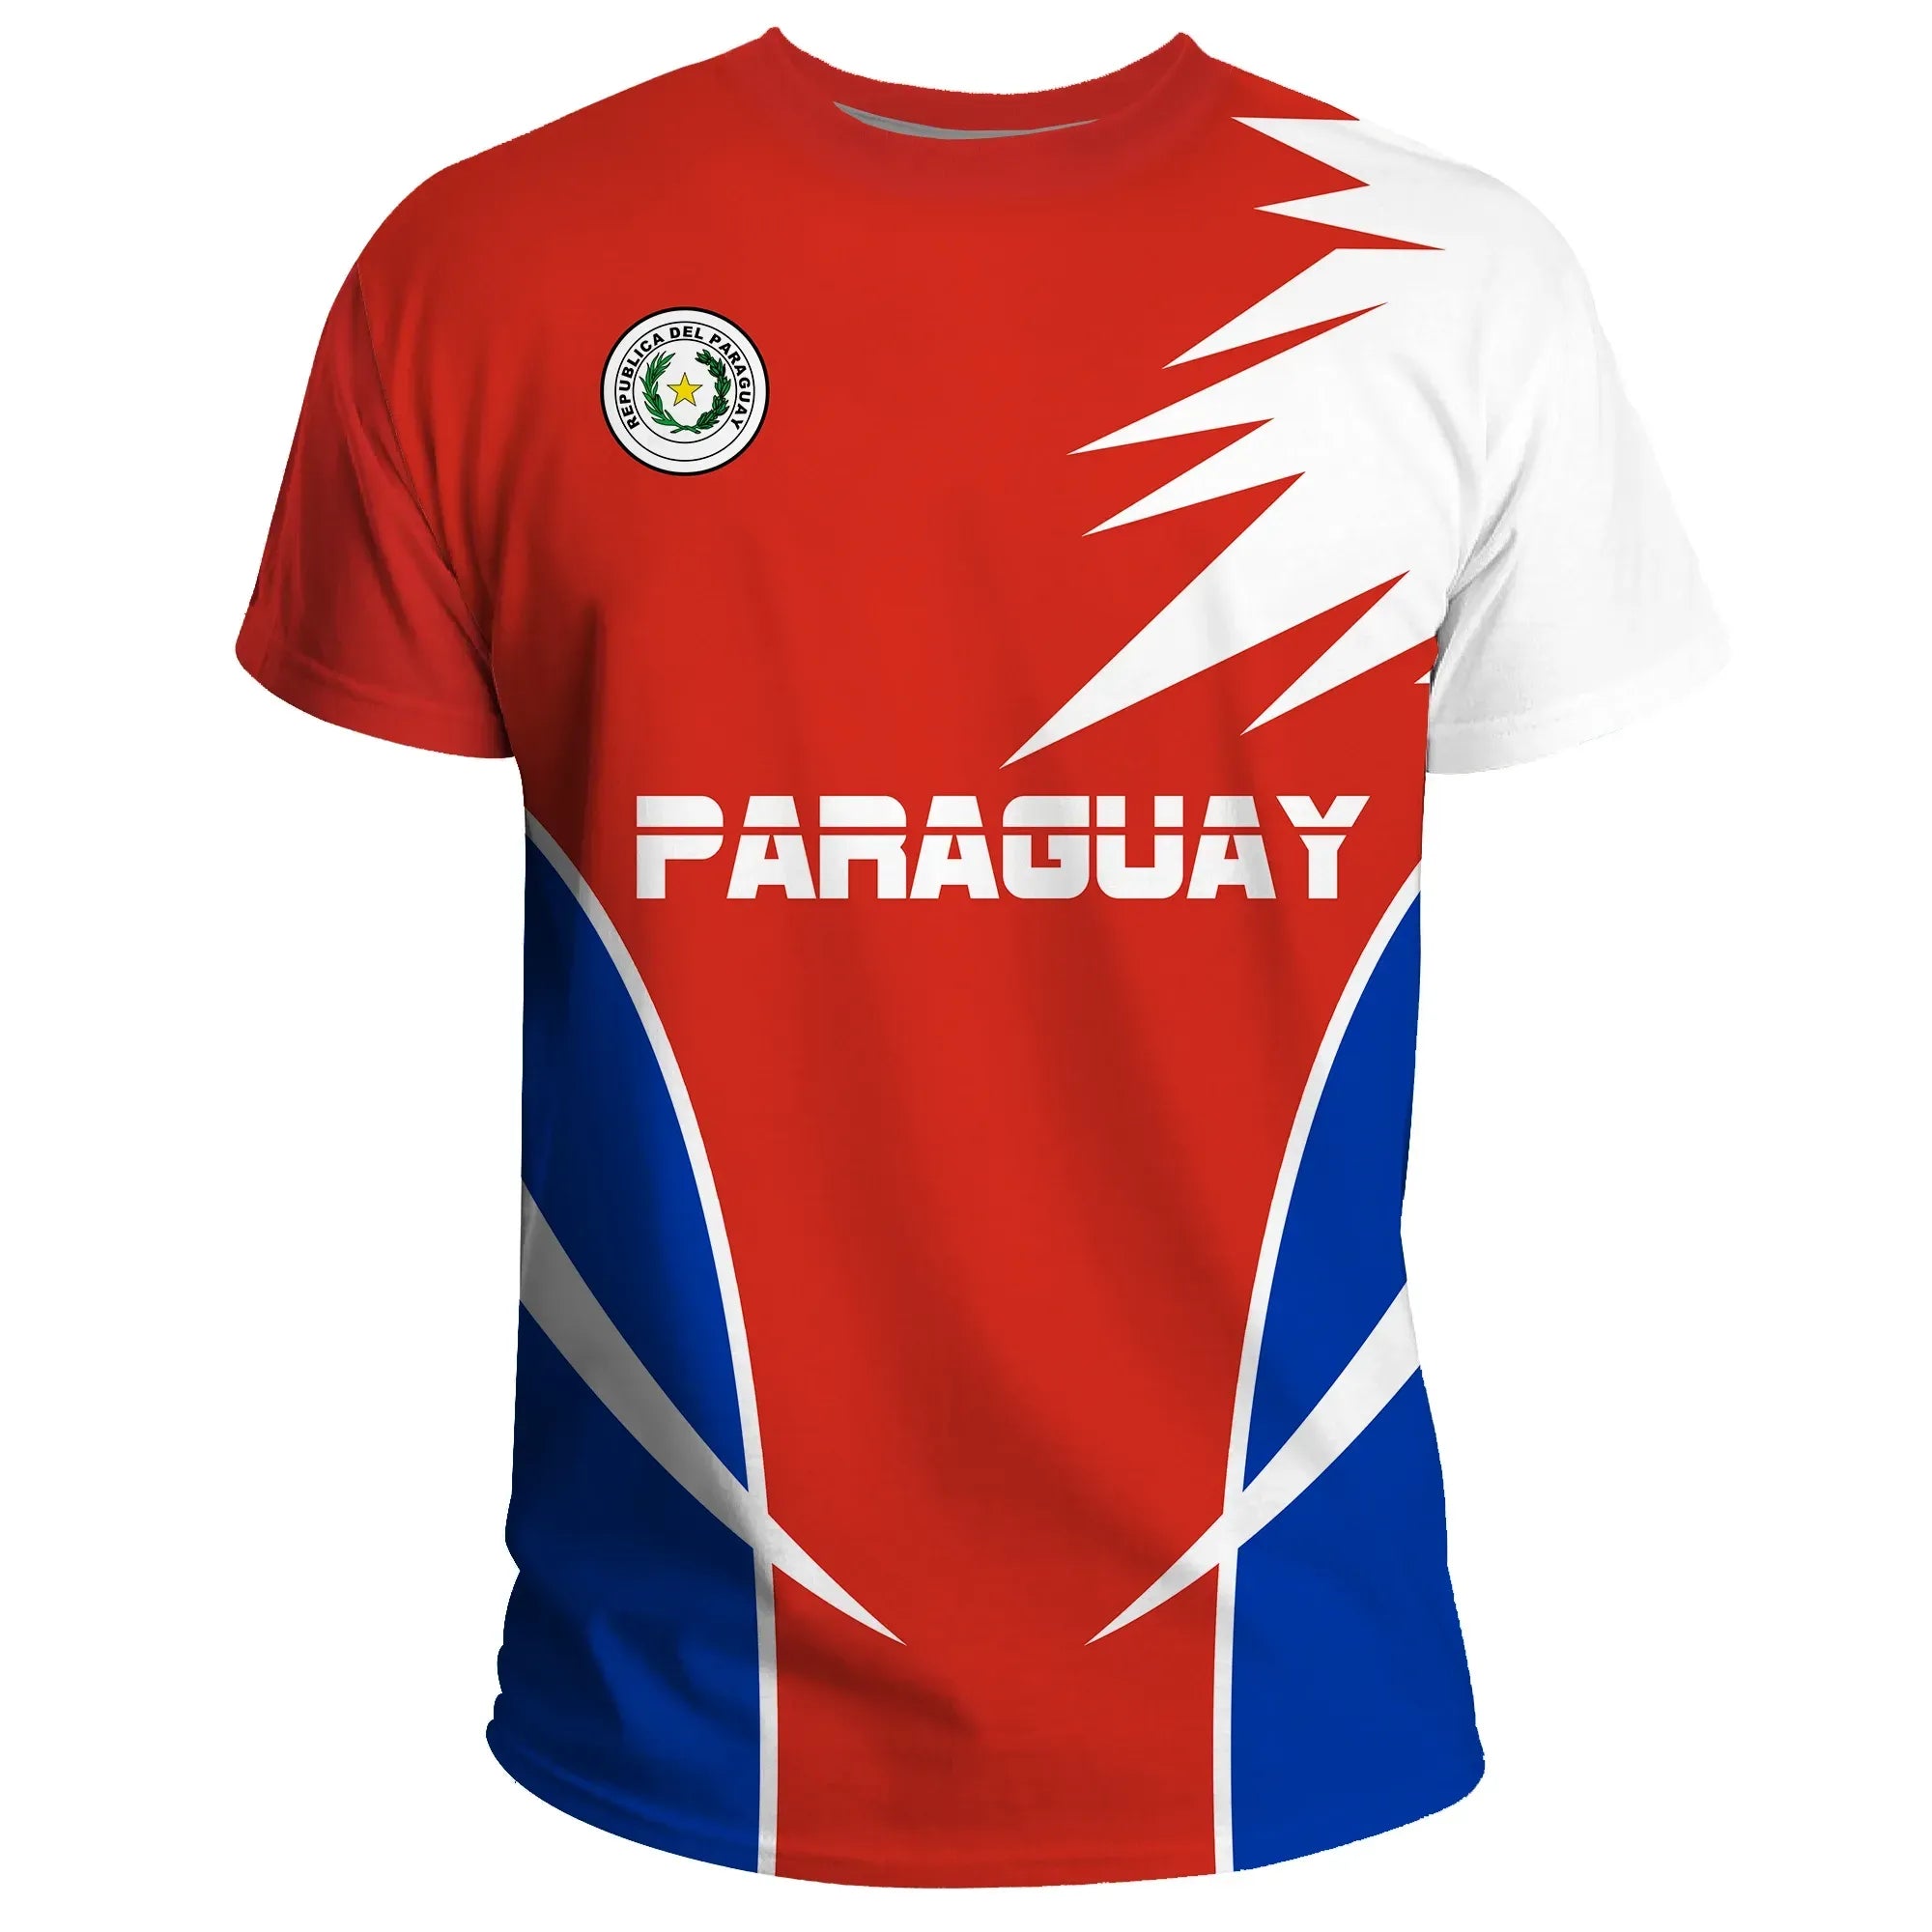 paraguay-t-shirt-active